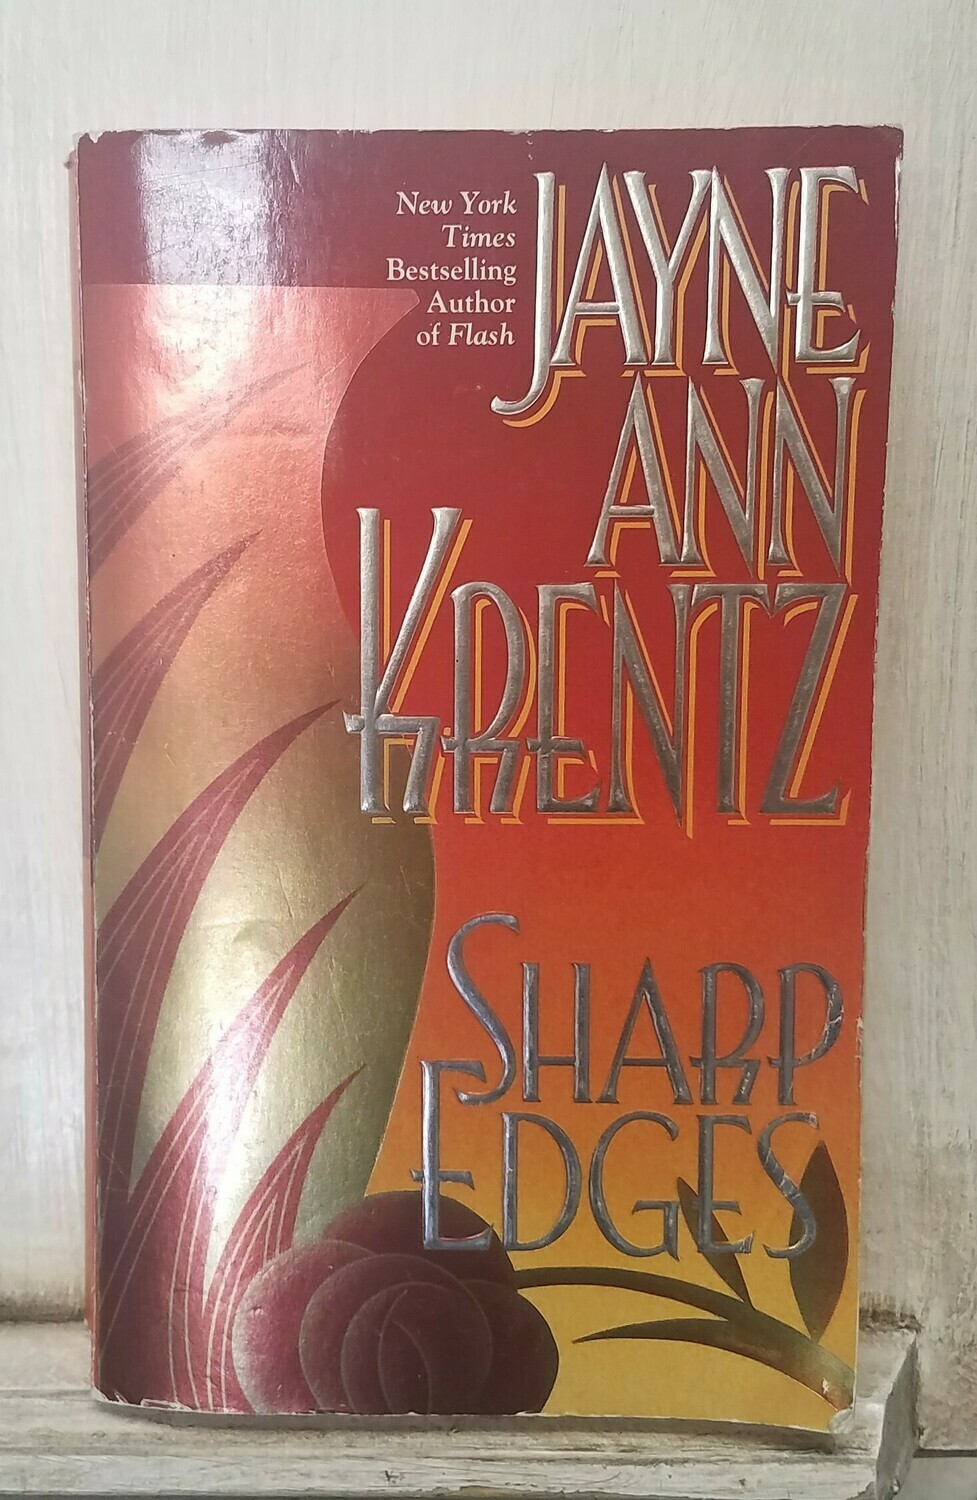 Sharp Edges by Jayne Ann Krentz